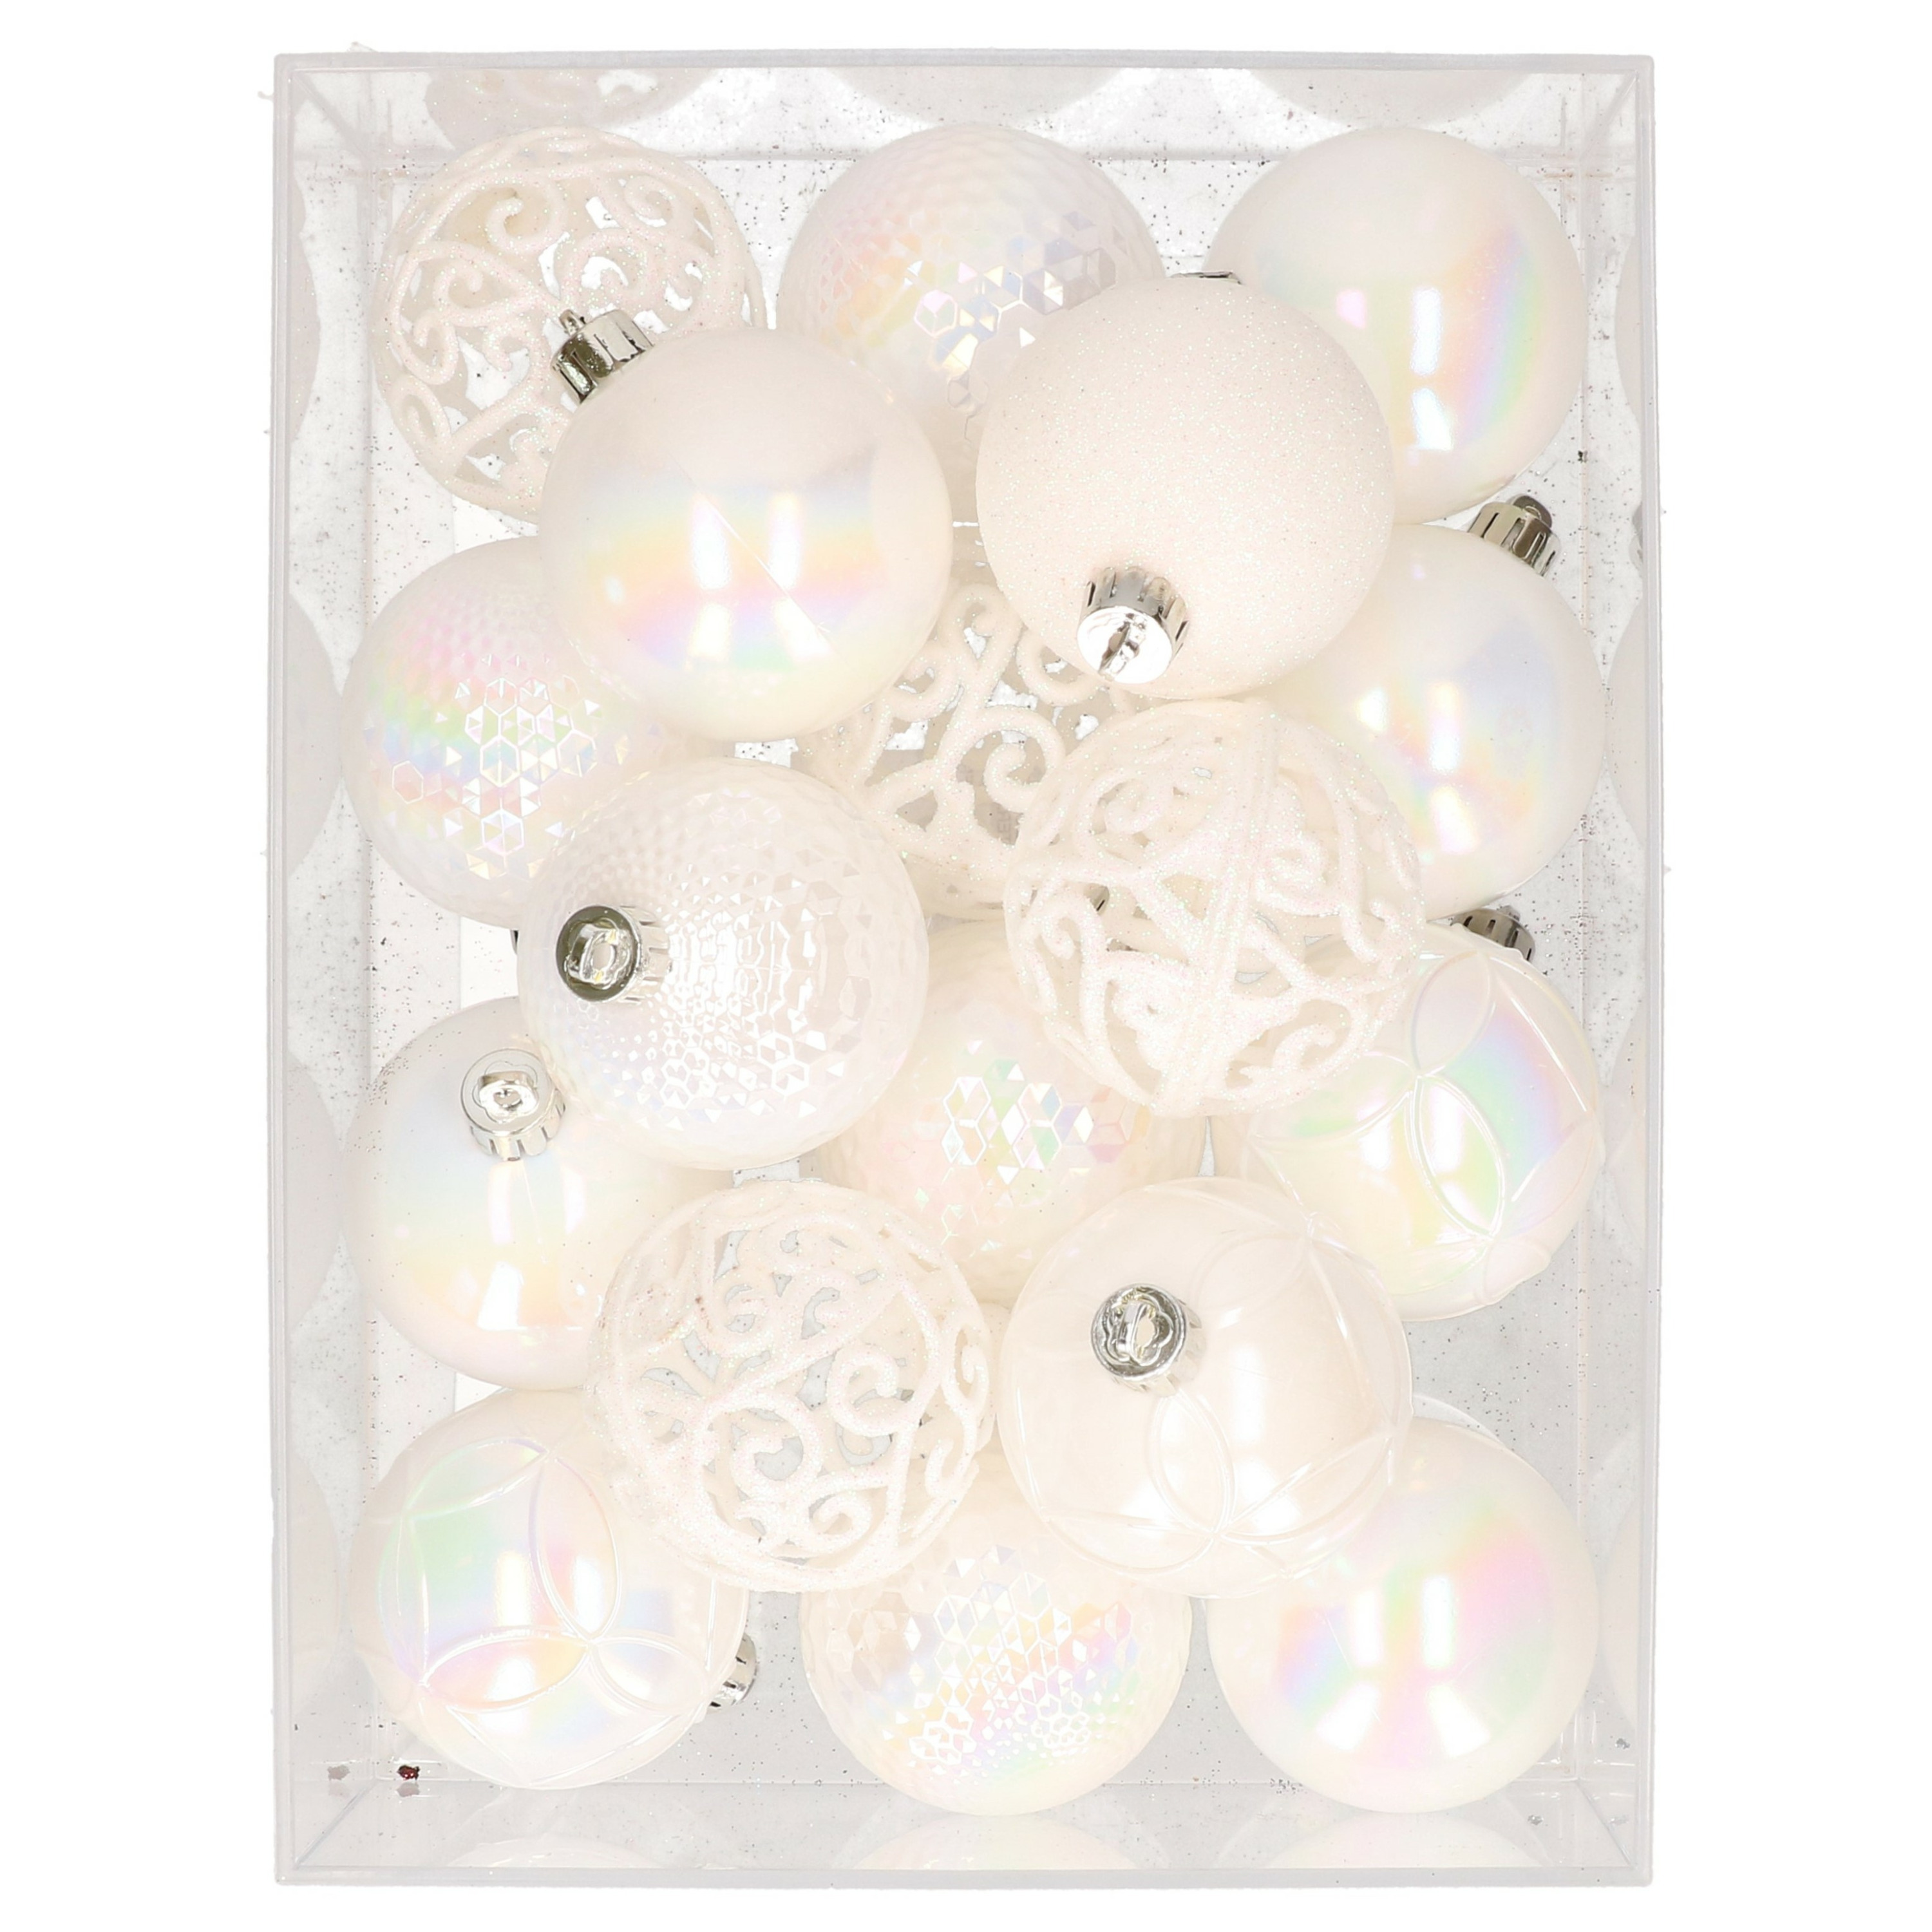 37x stuks kunststof kerstballen parelmoer wit 6 cm glans-mat-glitter mix